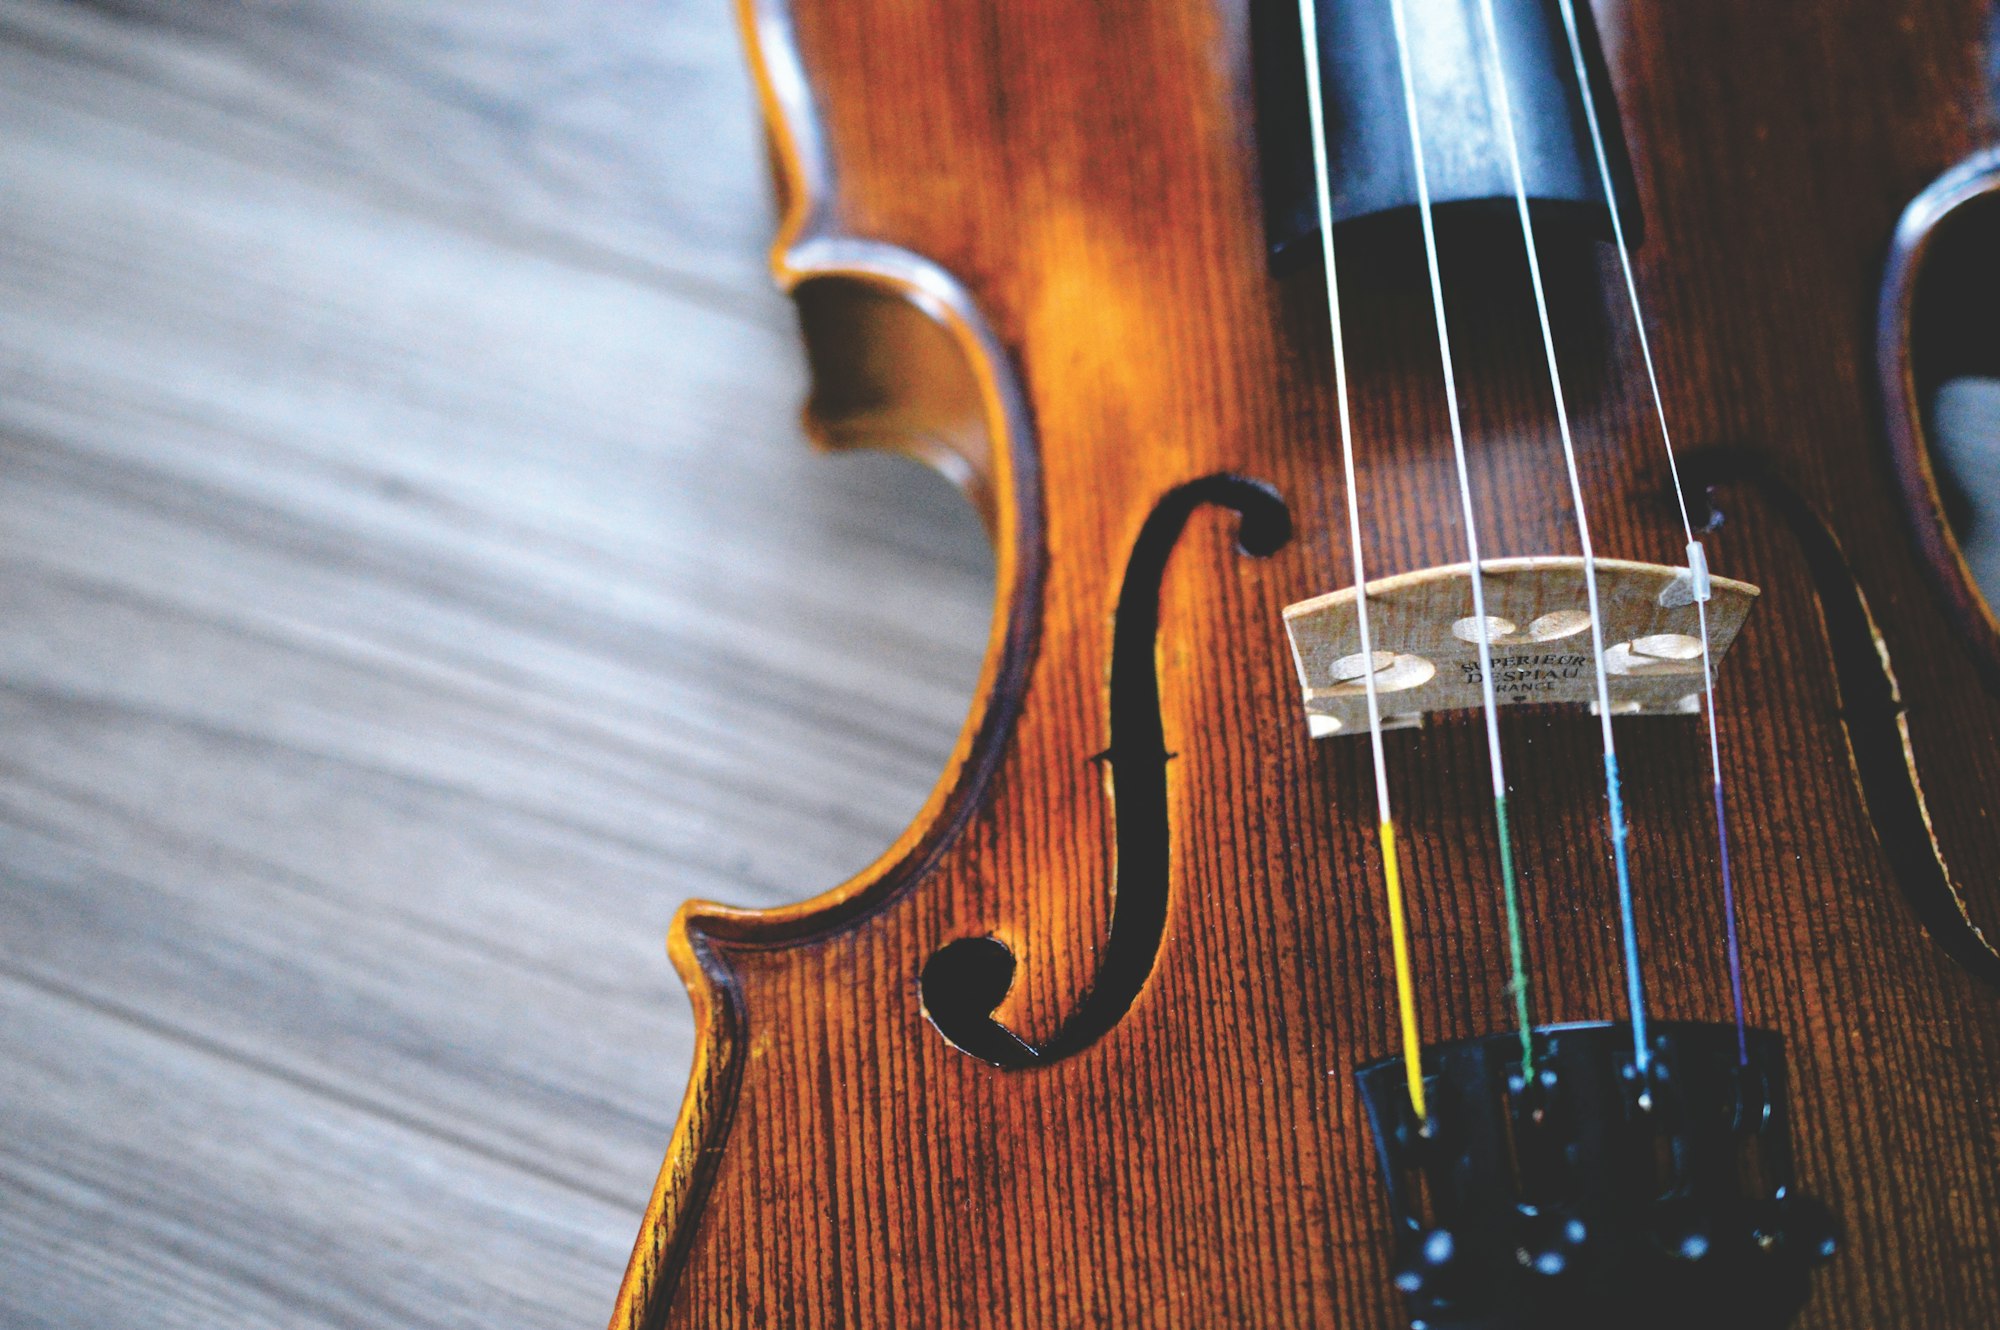 Violin strings in close-up